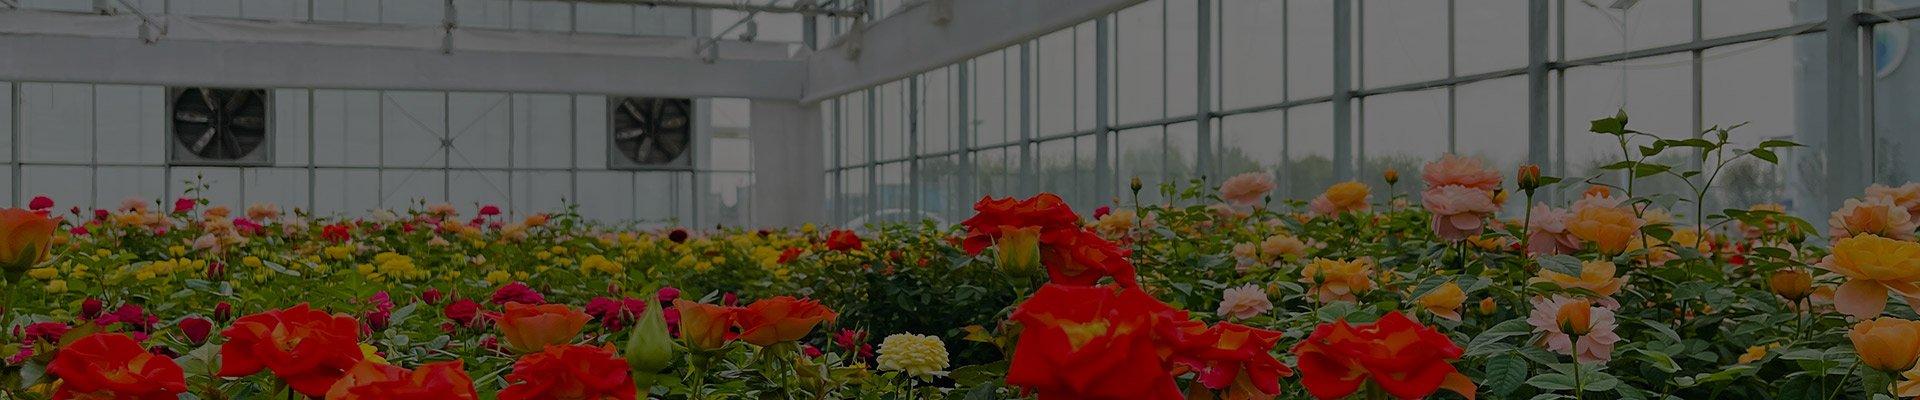 Flower-greenhouse-bg